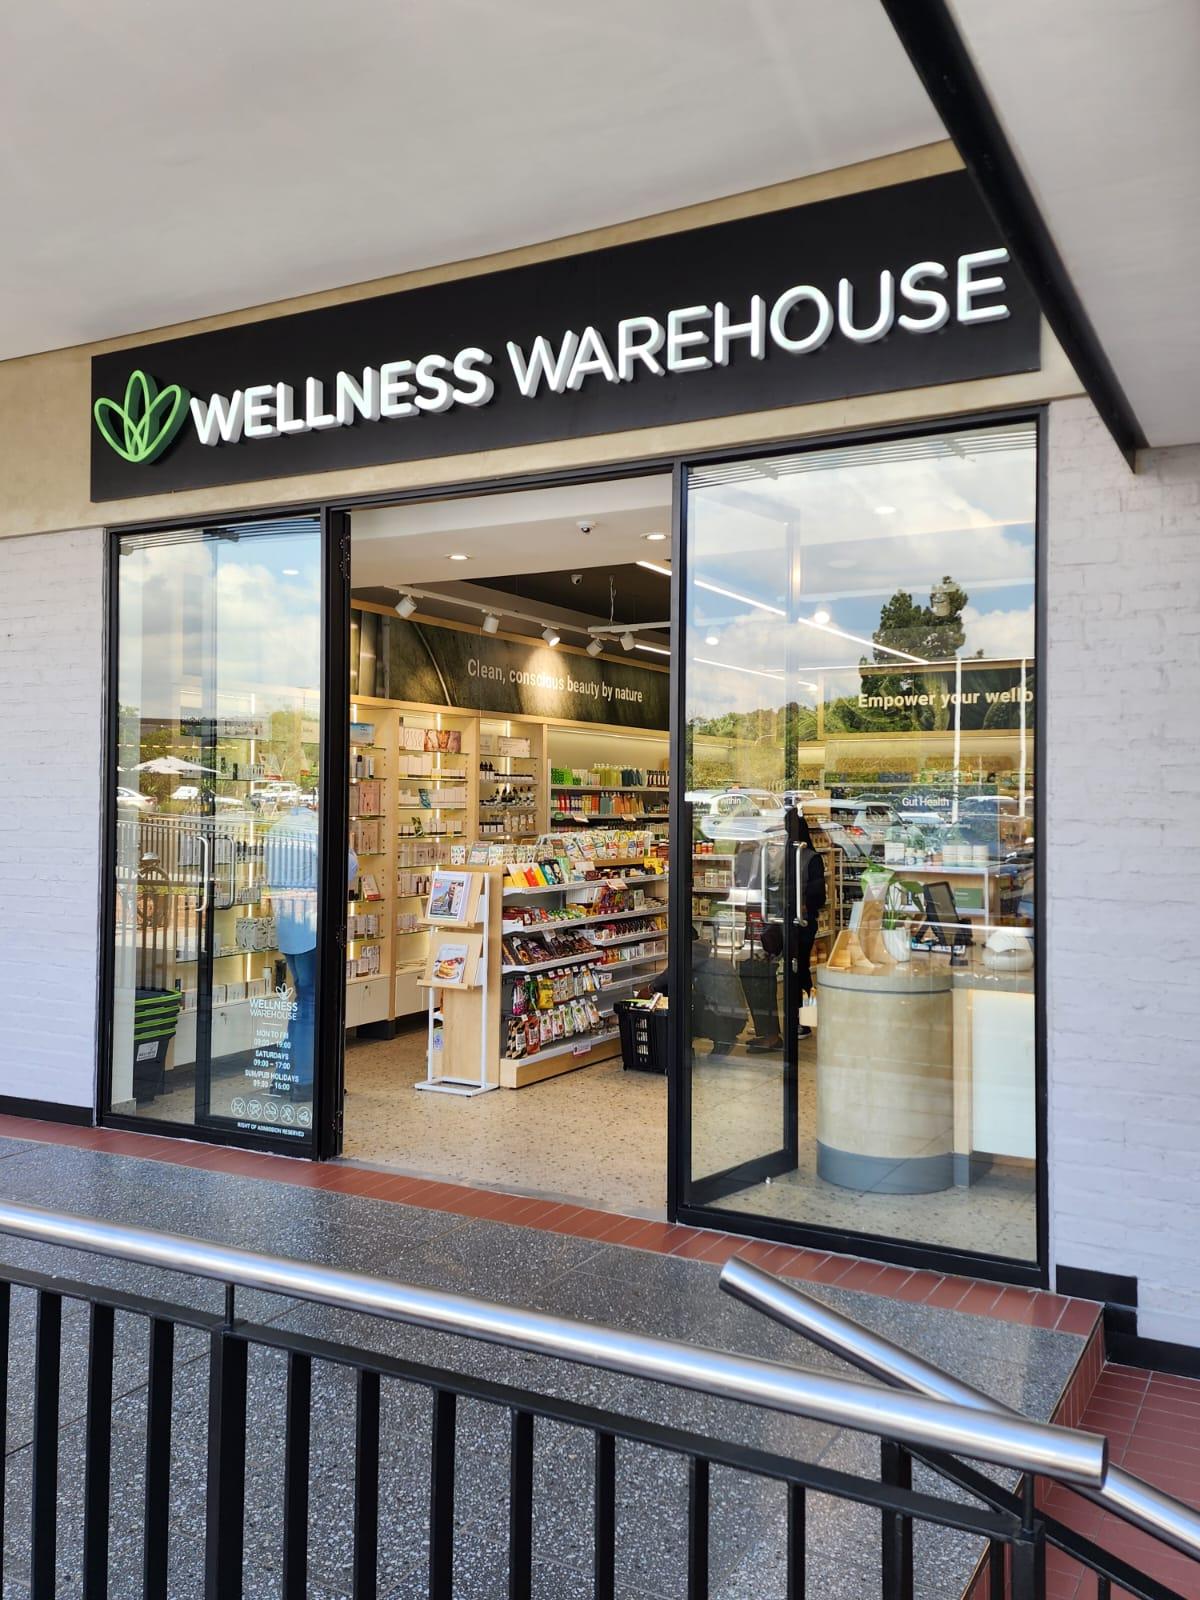 The Wellness Warehouse